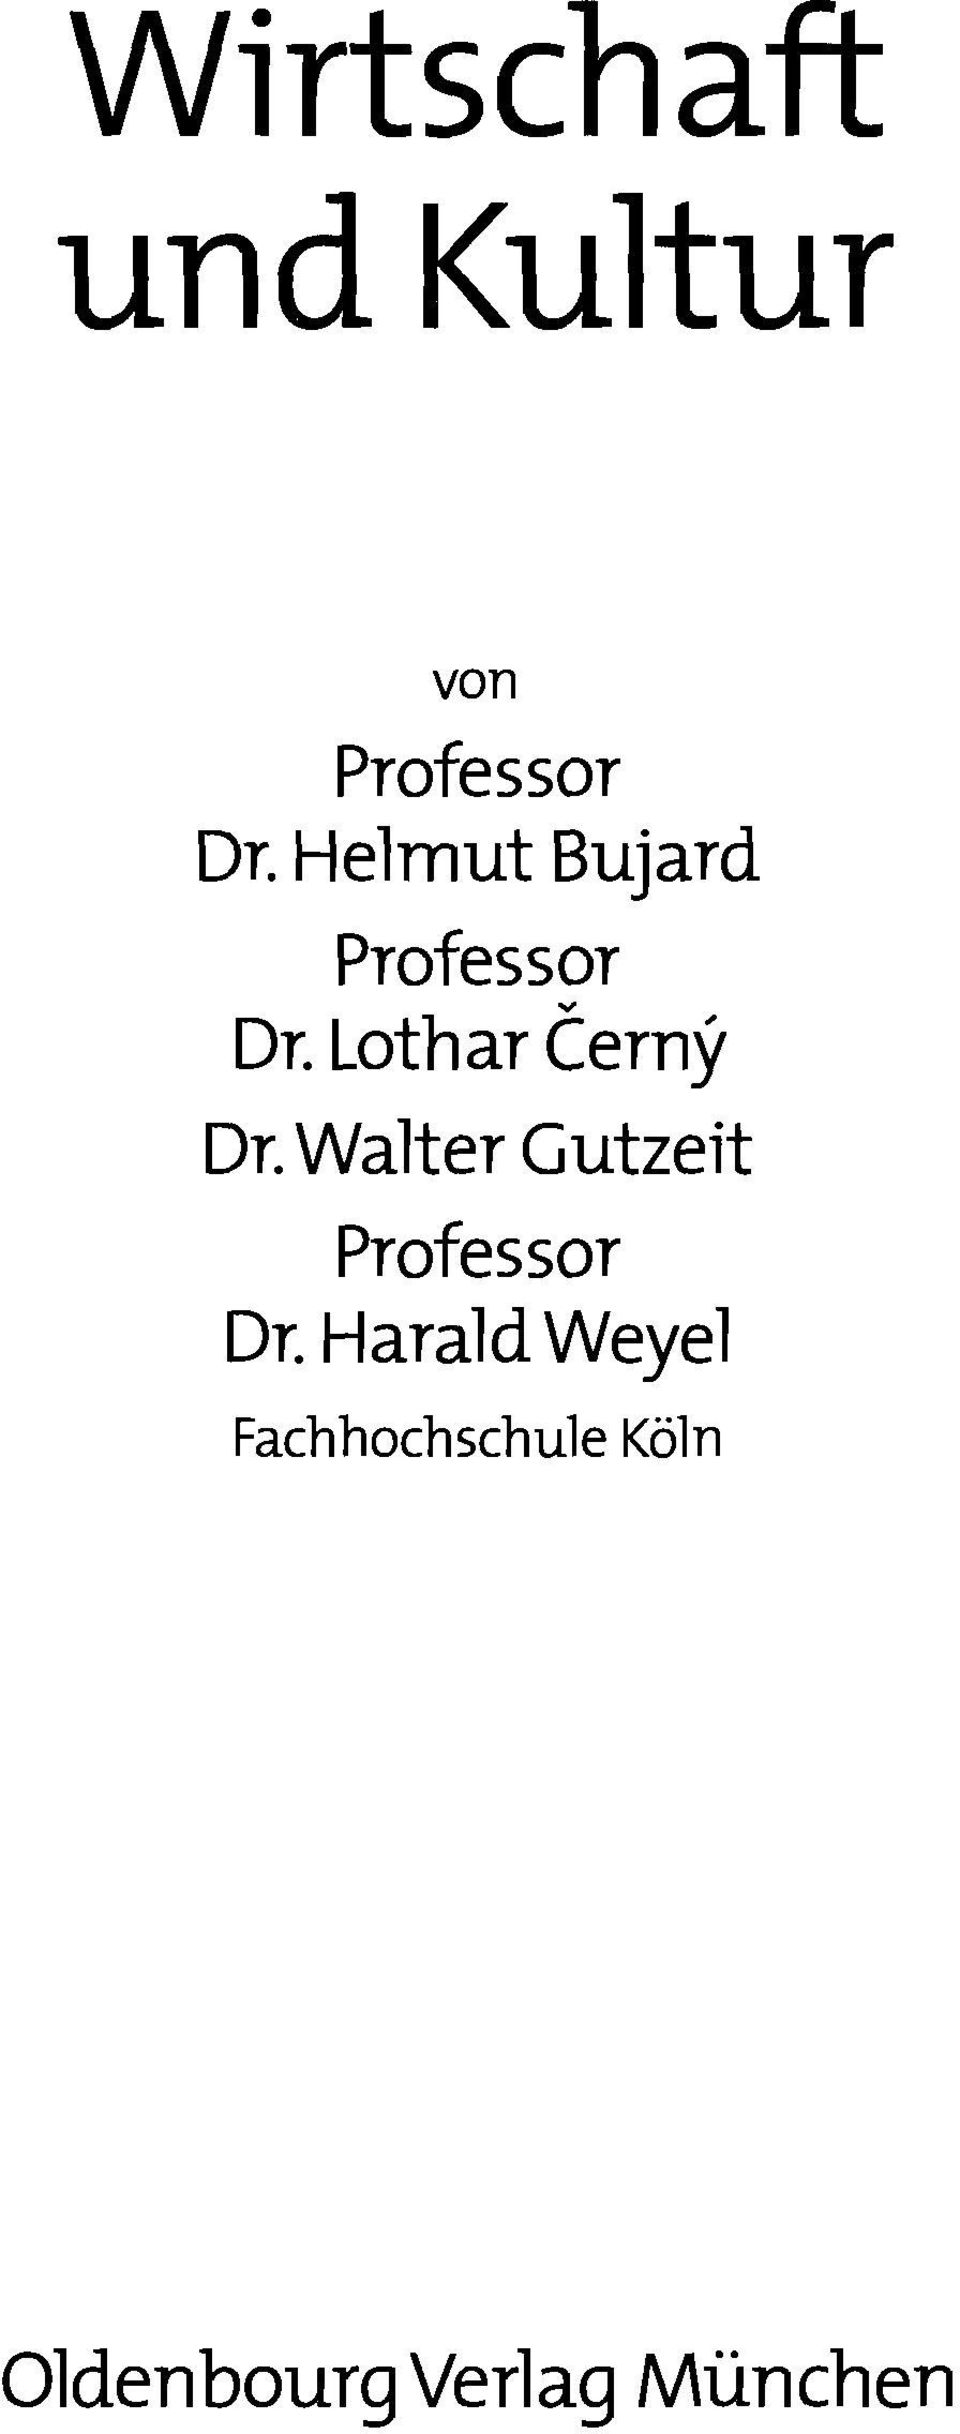 Lothar (erny Dr.